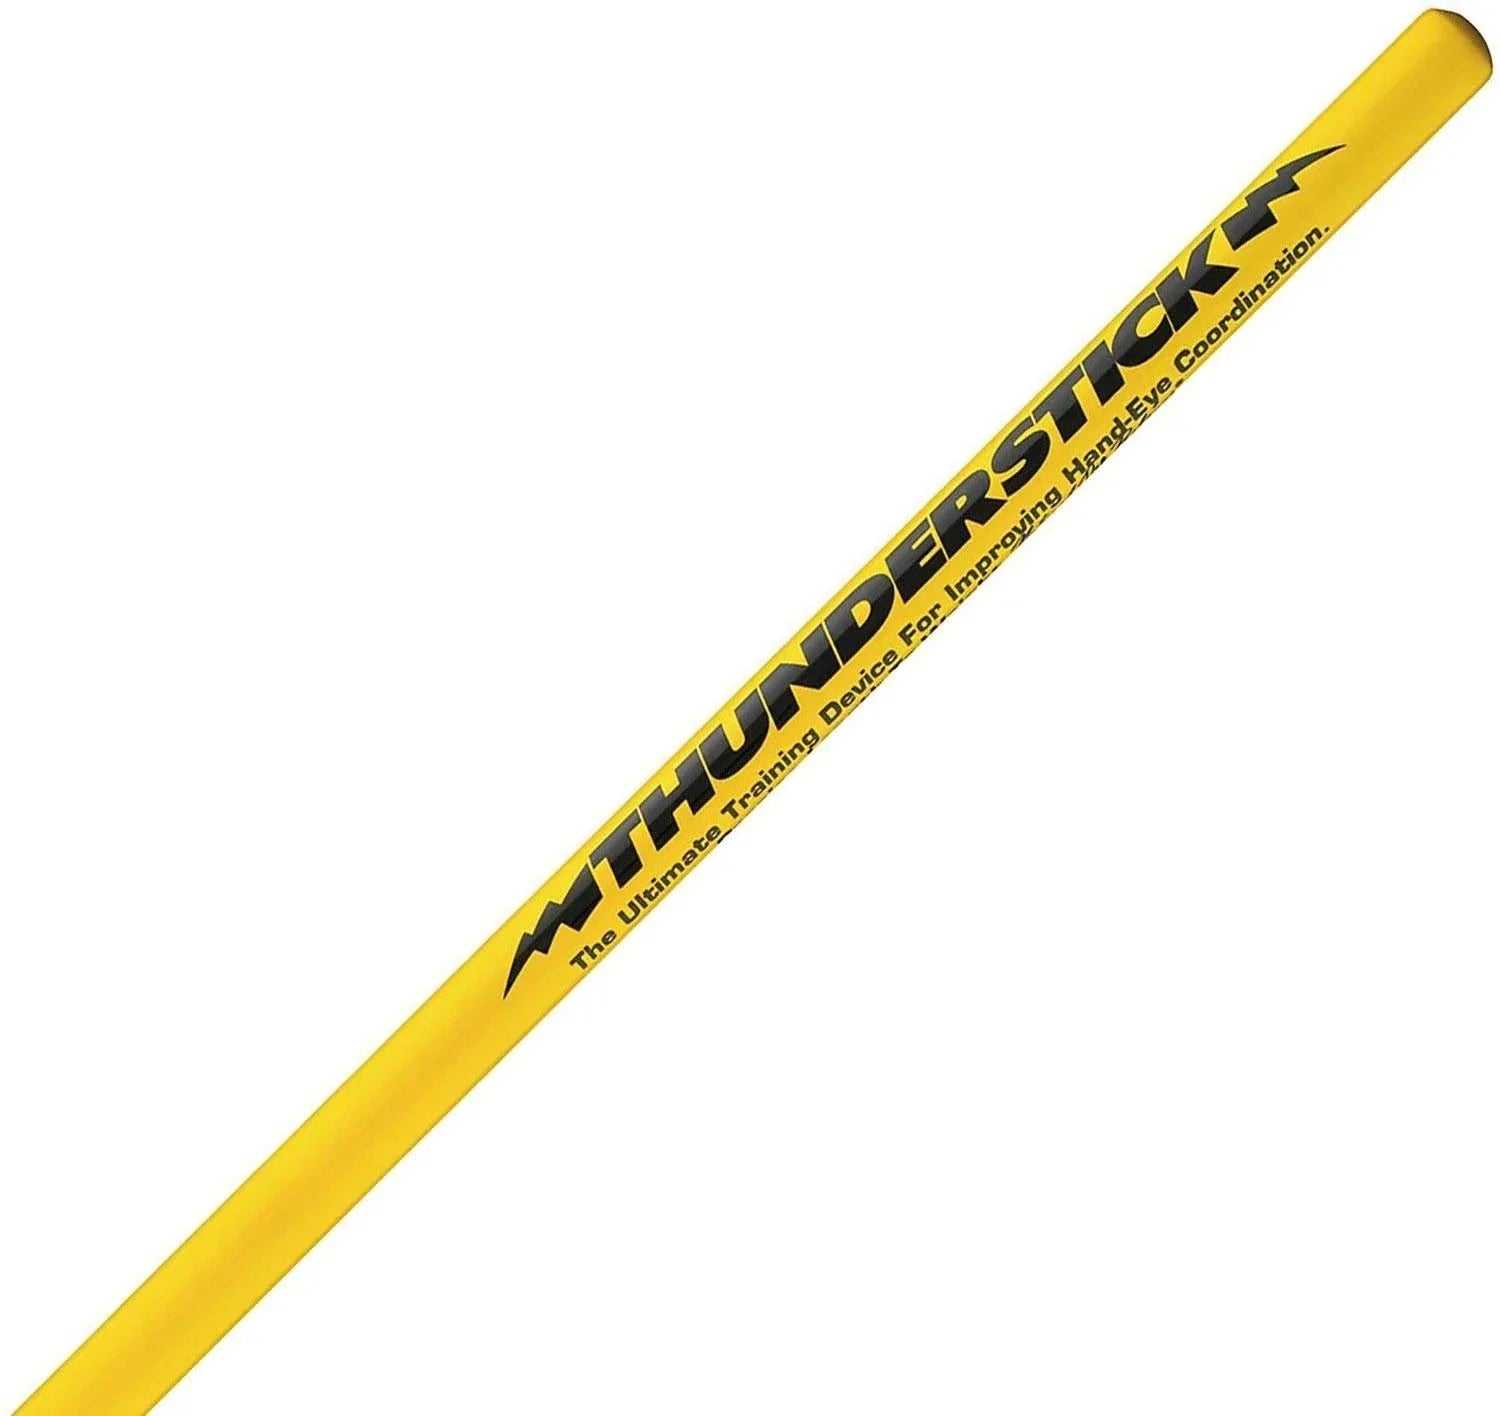 Easton T11 Youth Thunderstick Training Bat - Yellow Black - HIT A Double